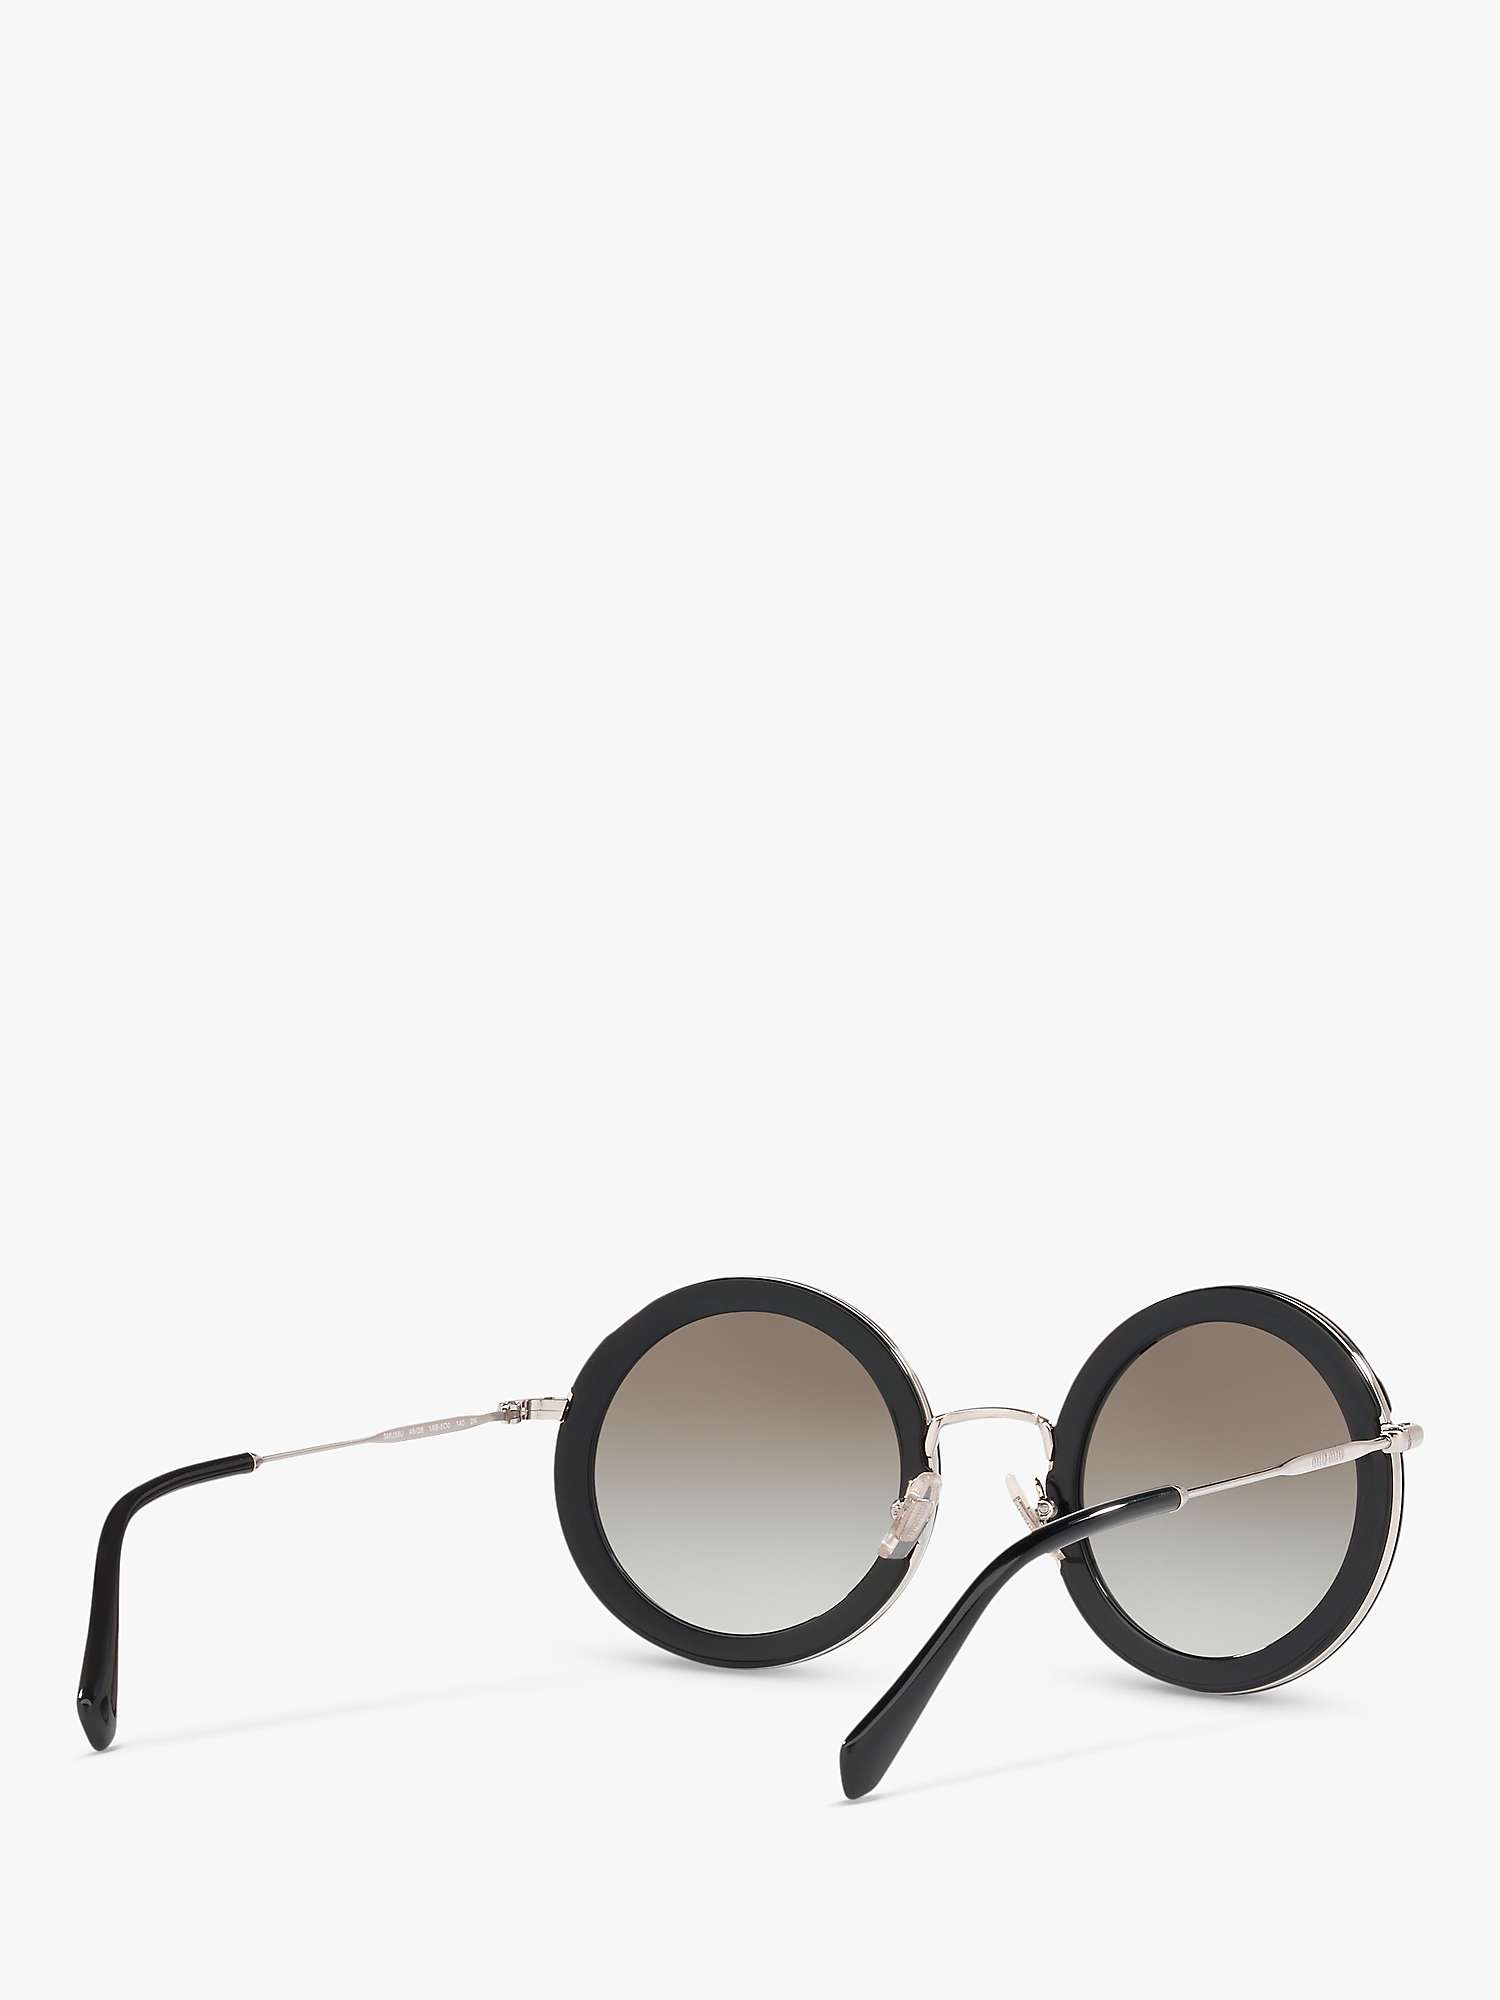 Buy Miu Miu MU 59US Women's Round Sunglasses, Black/Mirror Grey Online at johnlewis.com